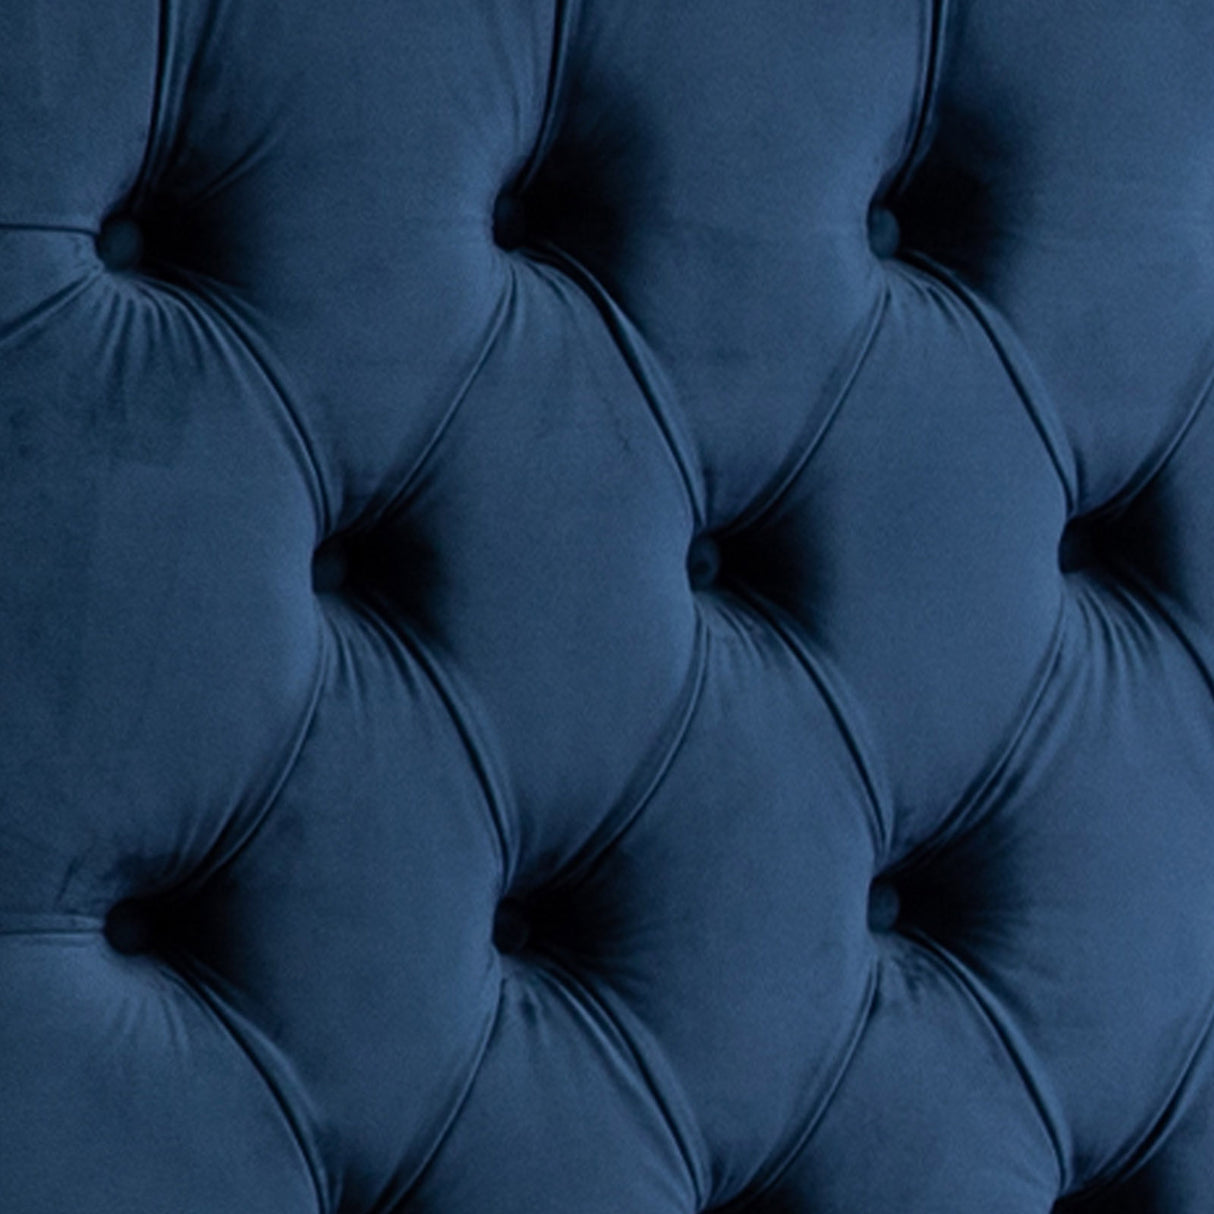 Queen Size Ember Bedframe Velvet Upholstery Deep Blue Colour Tufted Headboard Deep Quilting